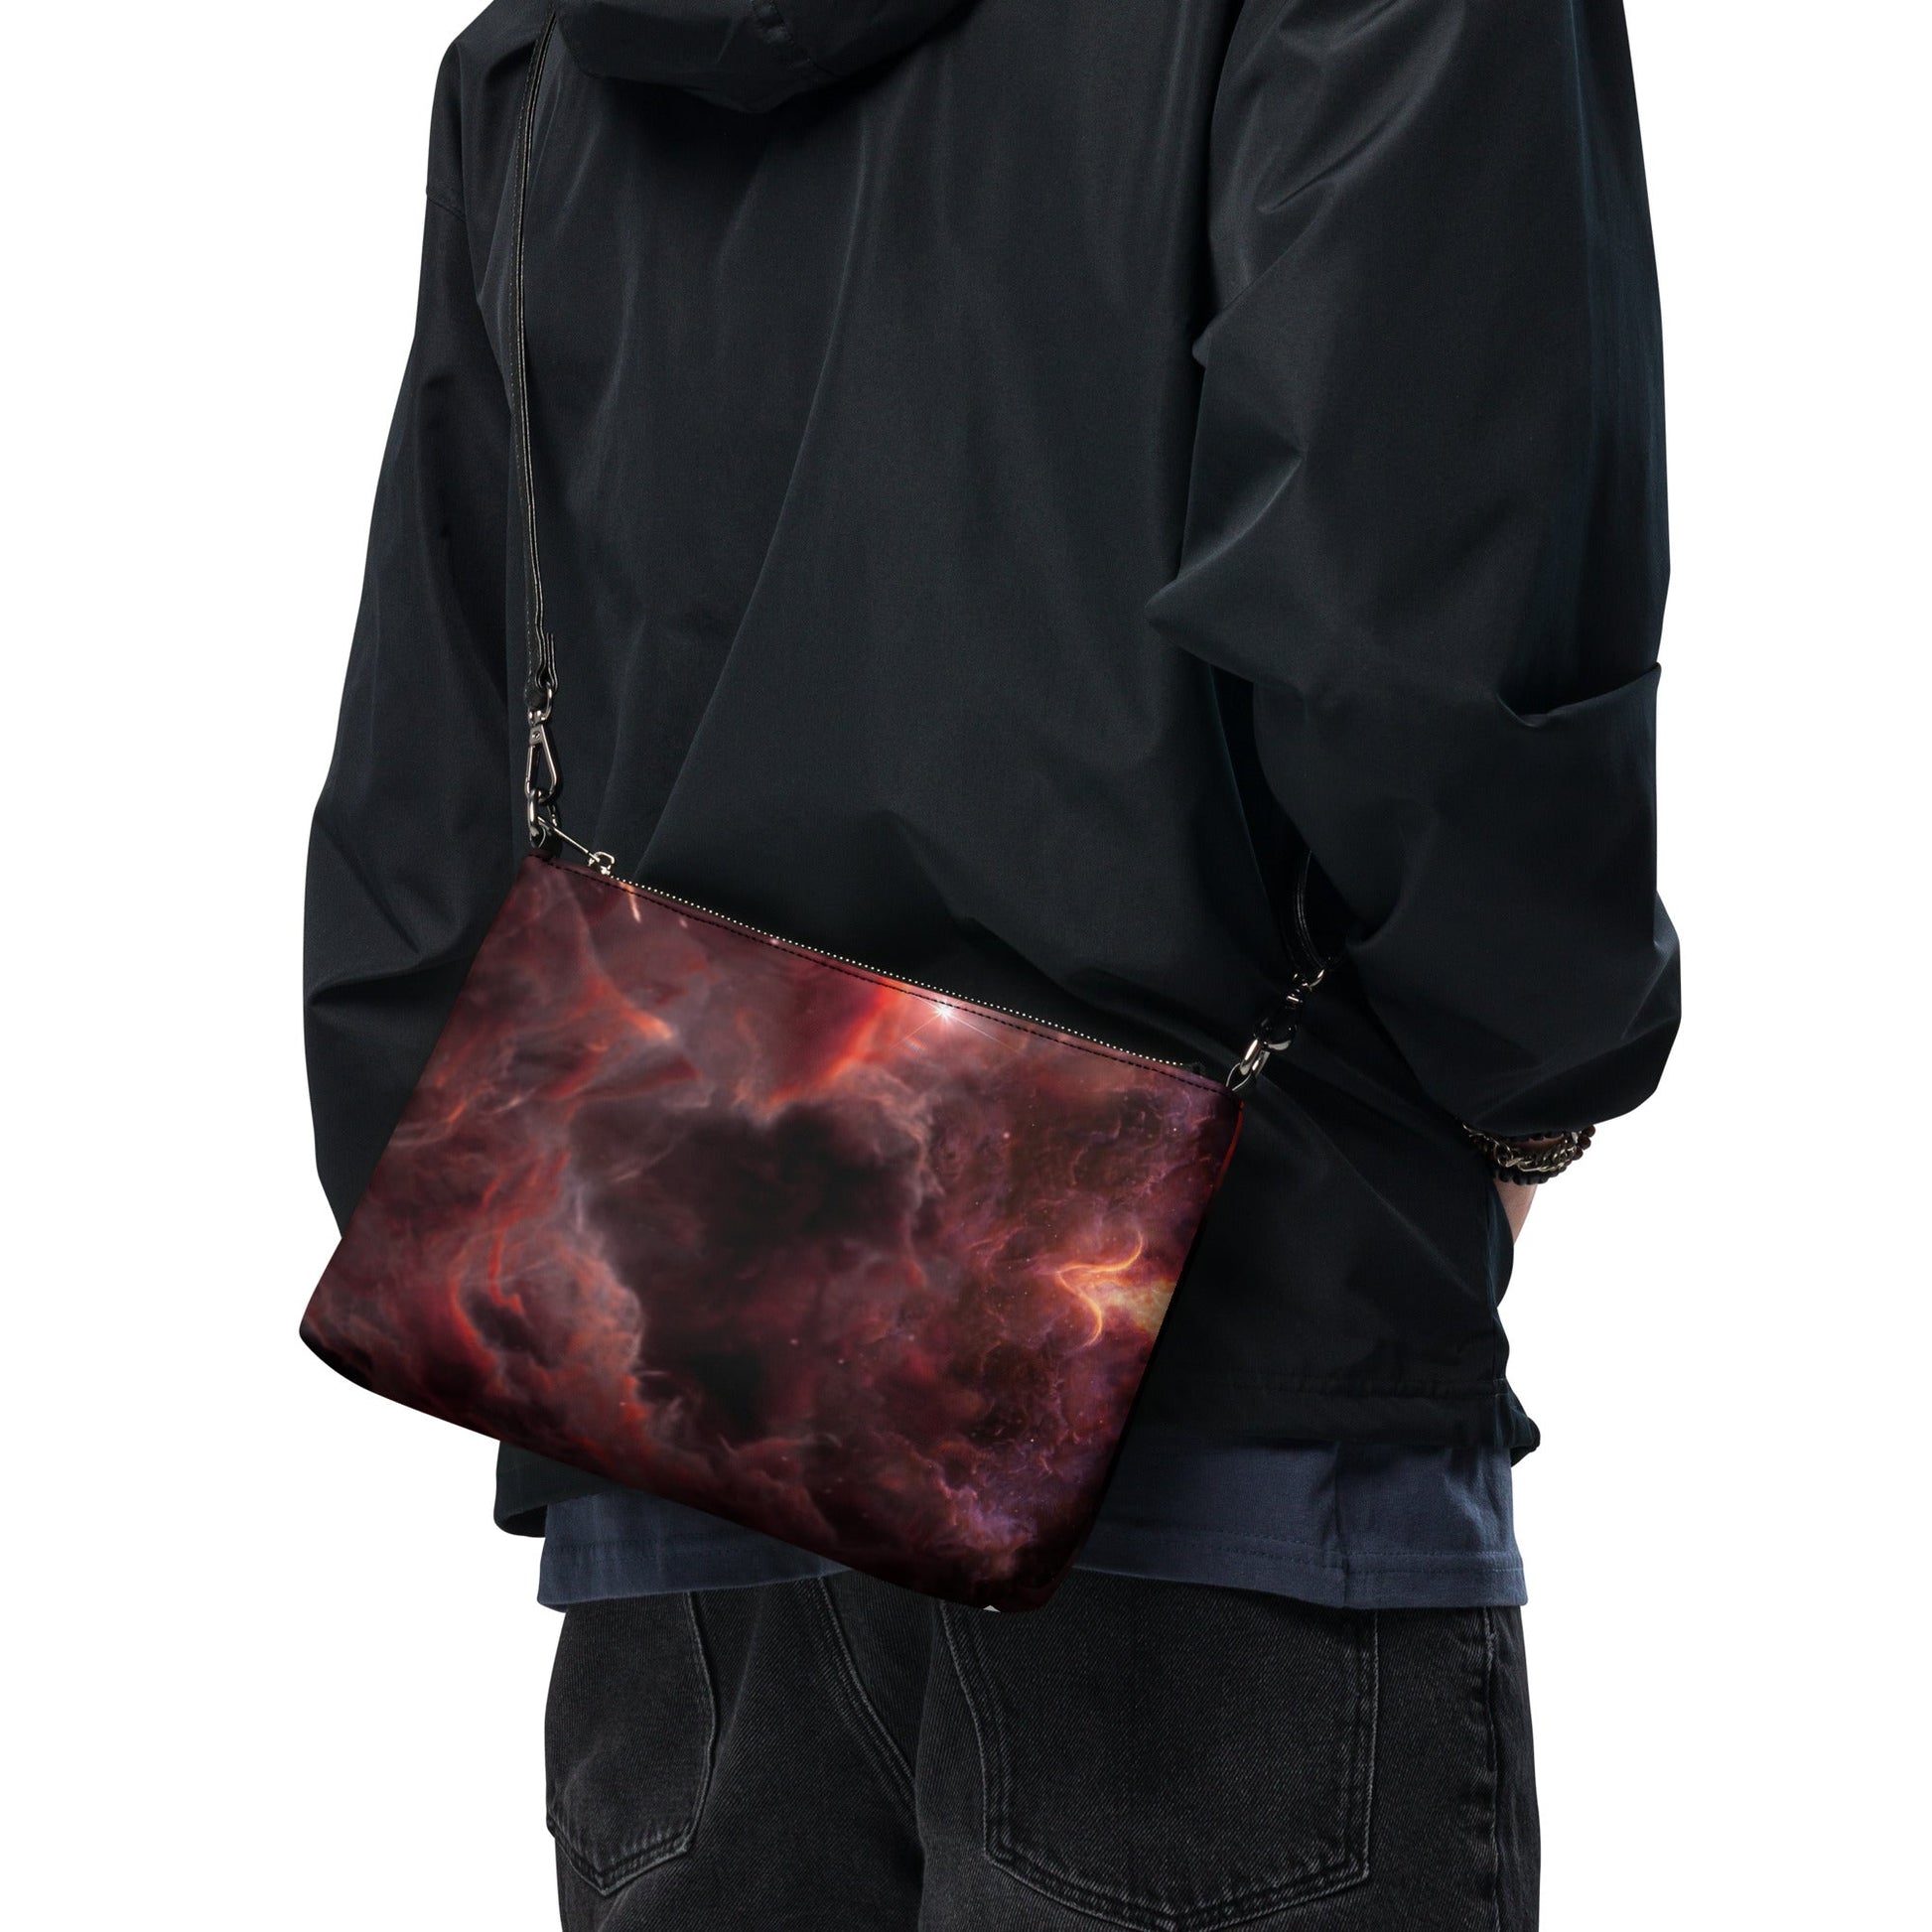 Crossbody bag |Intergalactic Space Force 2 | Nebula - Spectral Ink Shop - Crossbody bag -4068602_16708